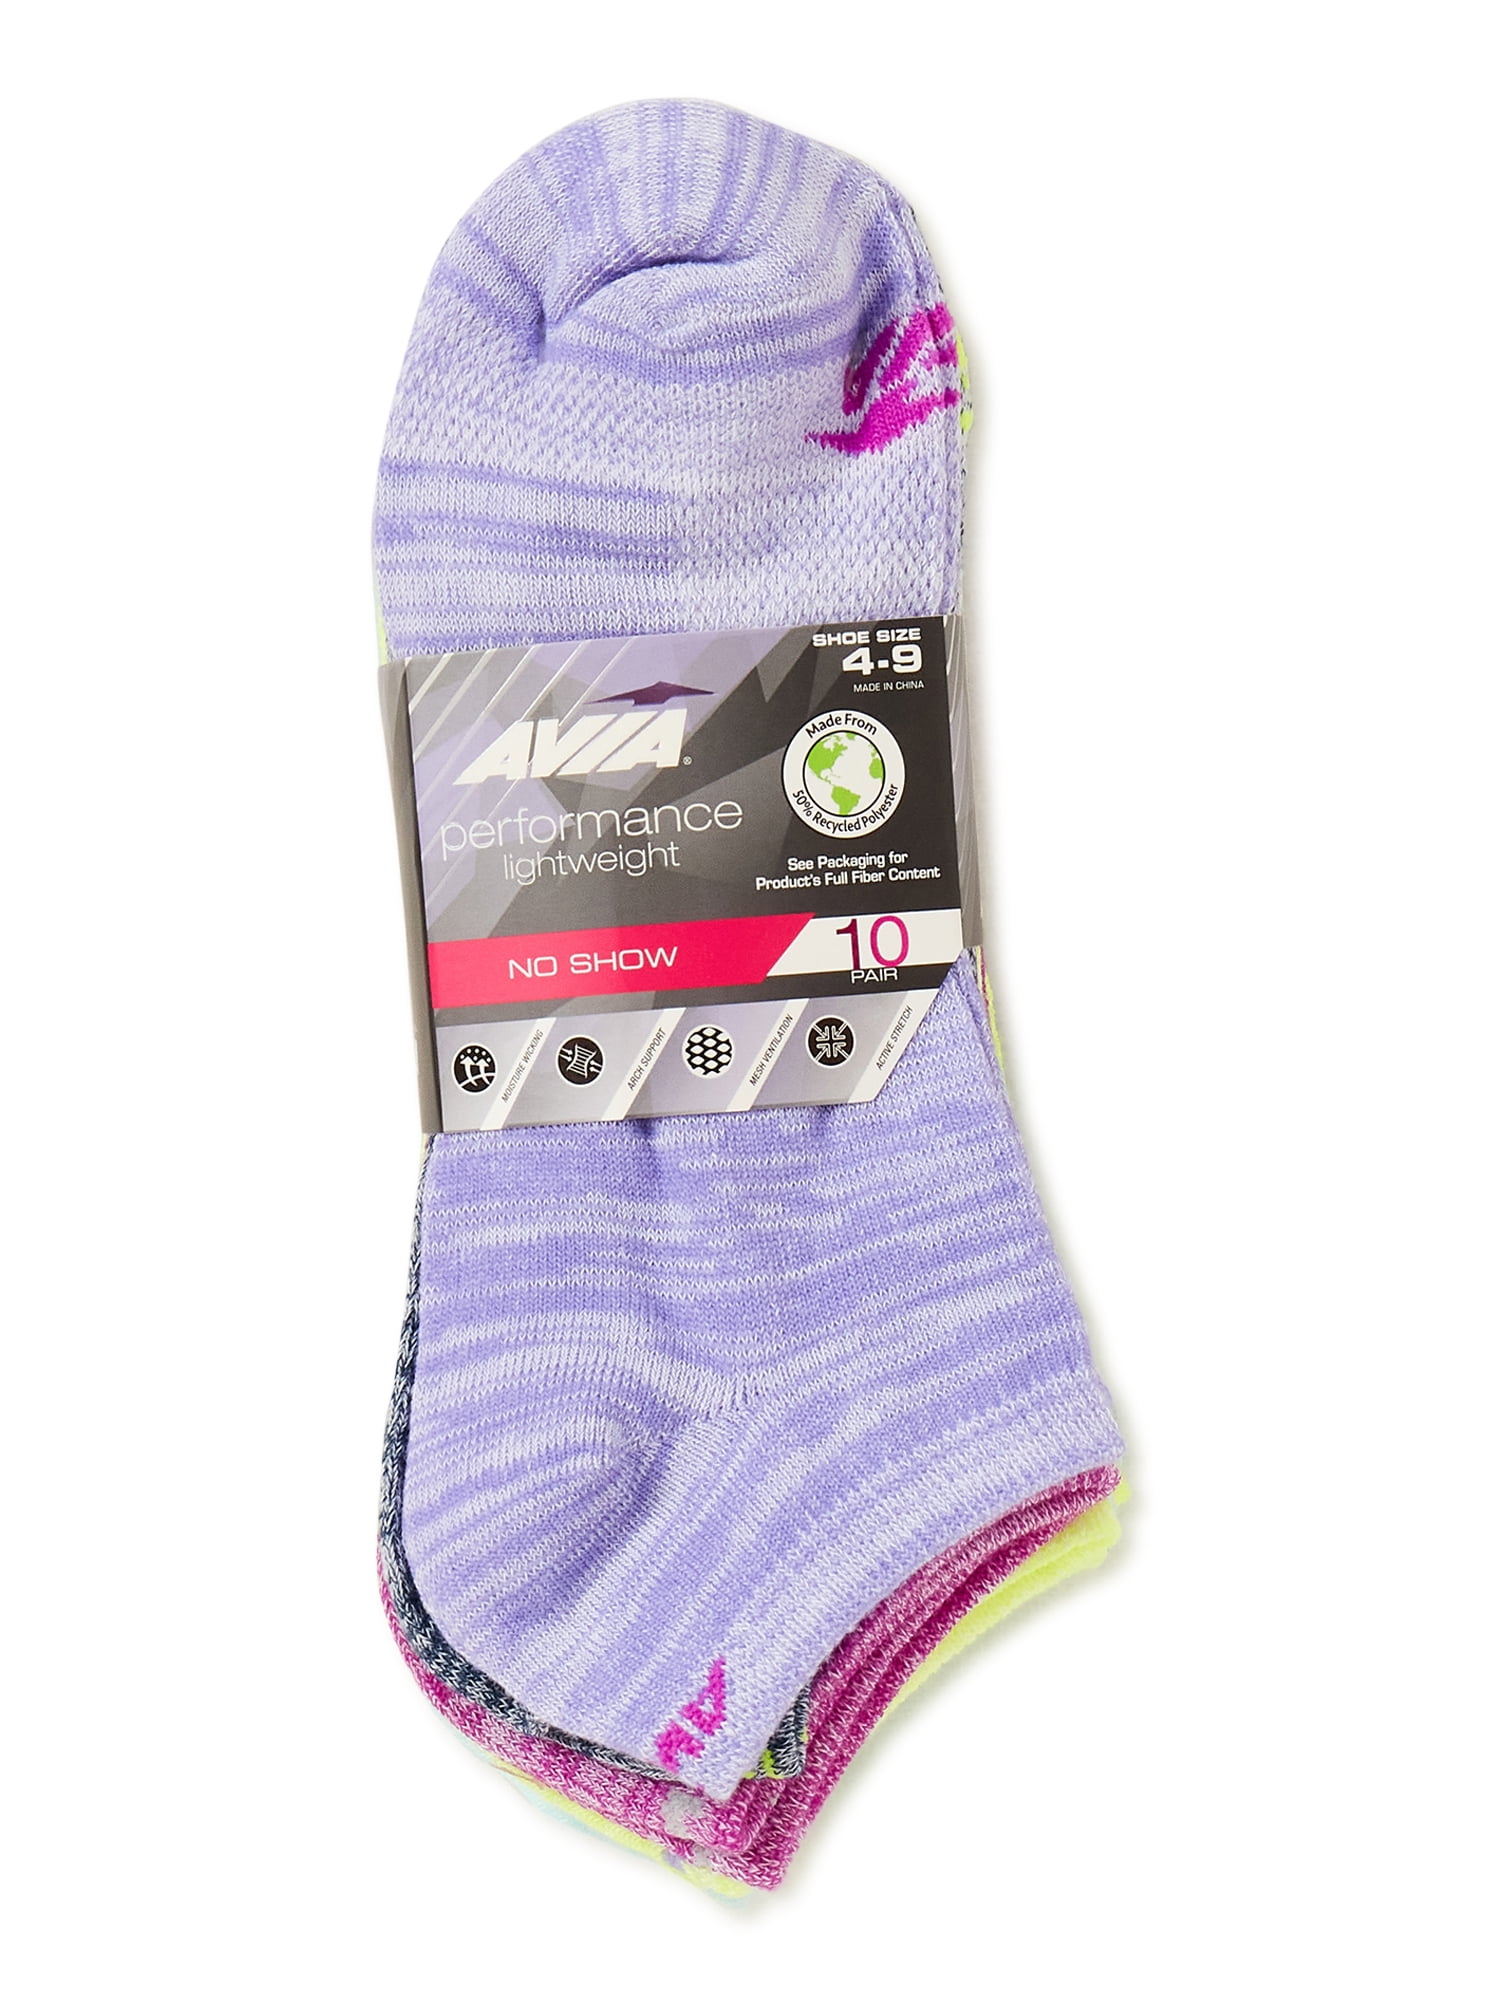 Avia Women's Cushioned No Show Socks (12 Pack), Size 4-9, Bright